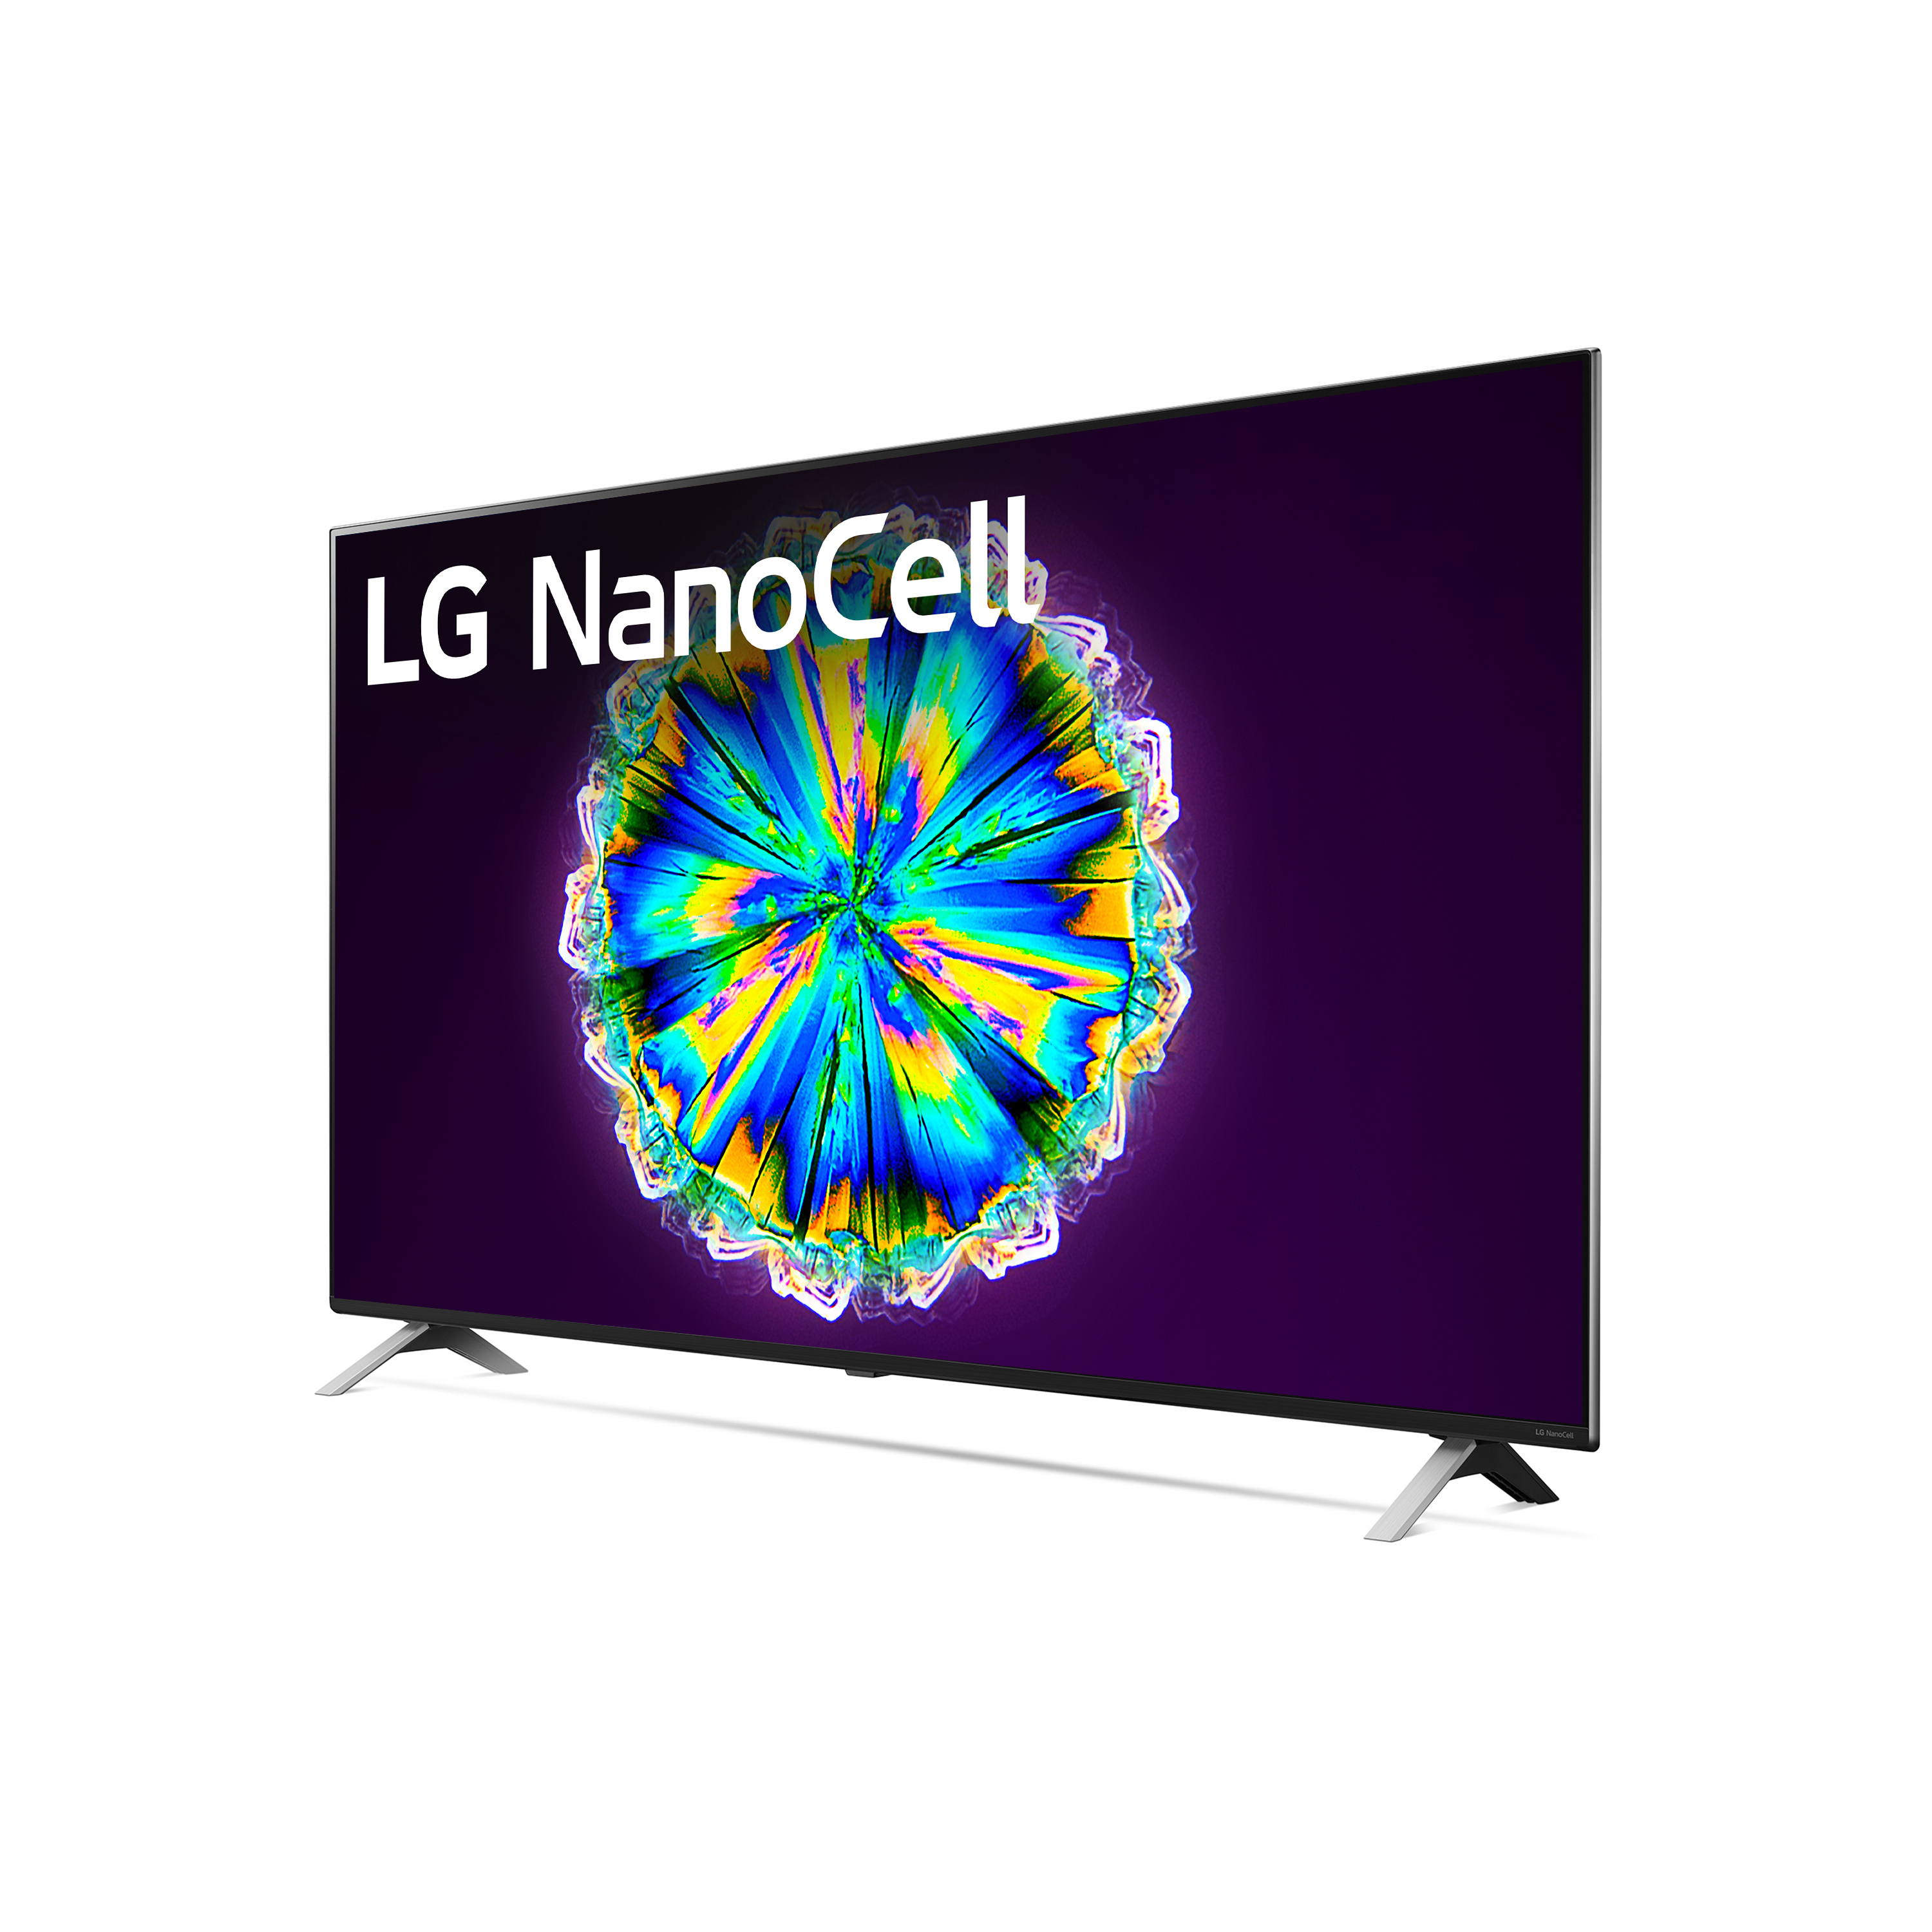 LG 49" Class 4K UHD 2160P NanoCell Smart TV with HDR 49NANO85UNA 2020 Model - image 4 of 17